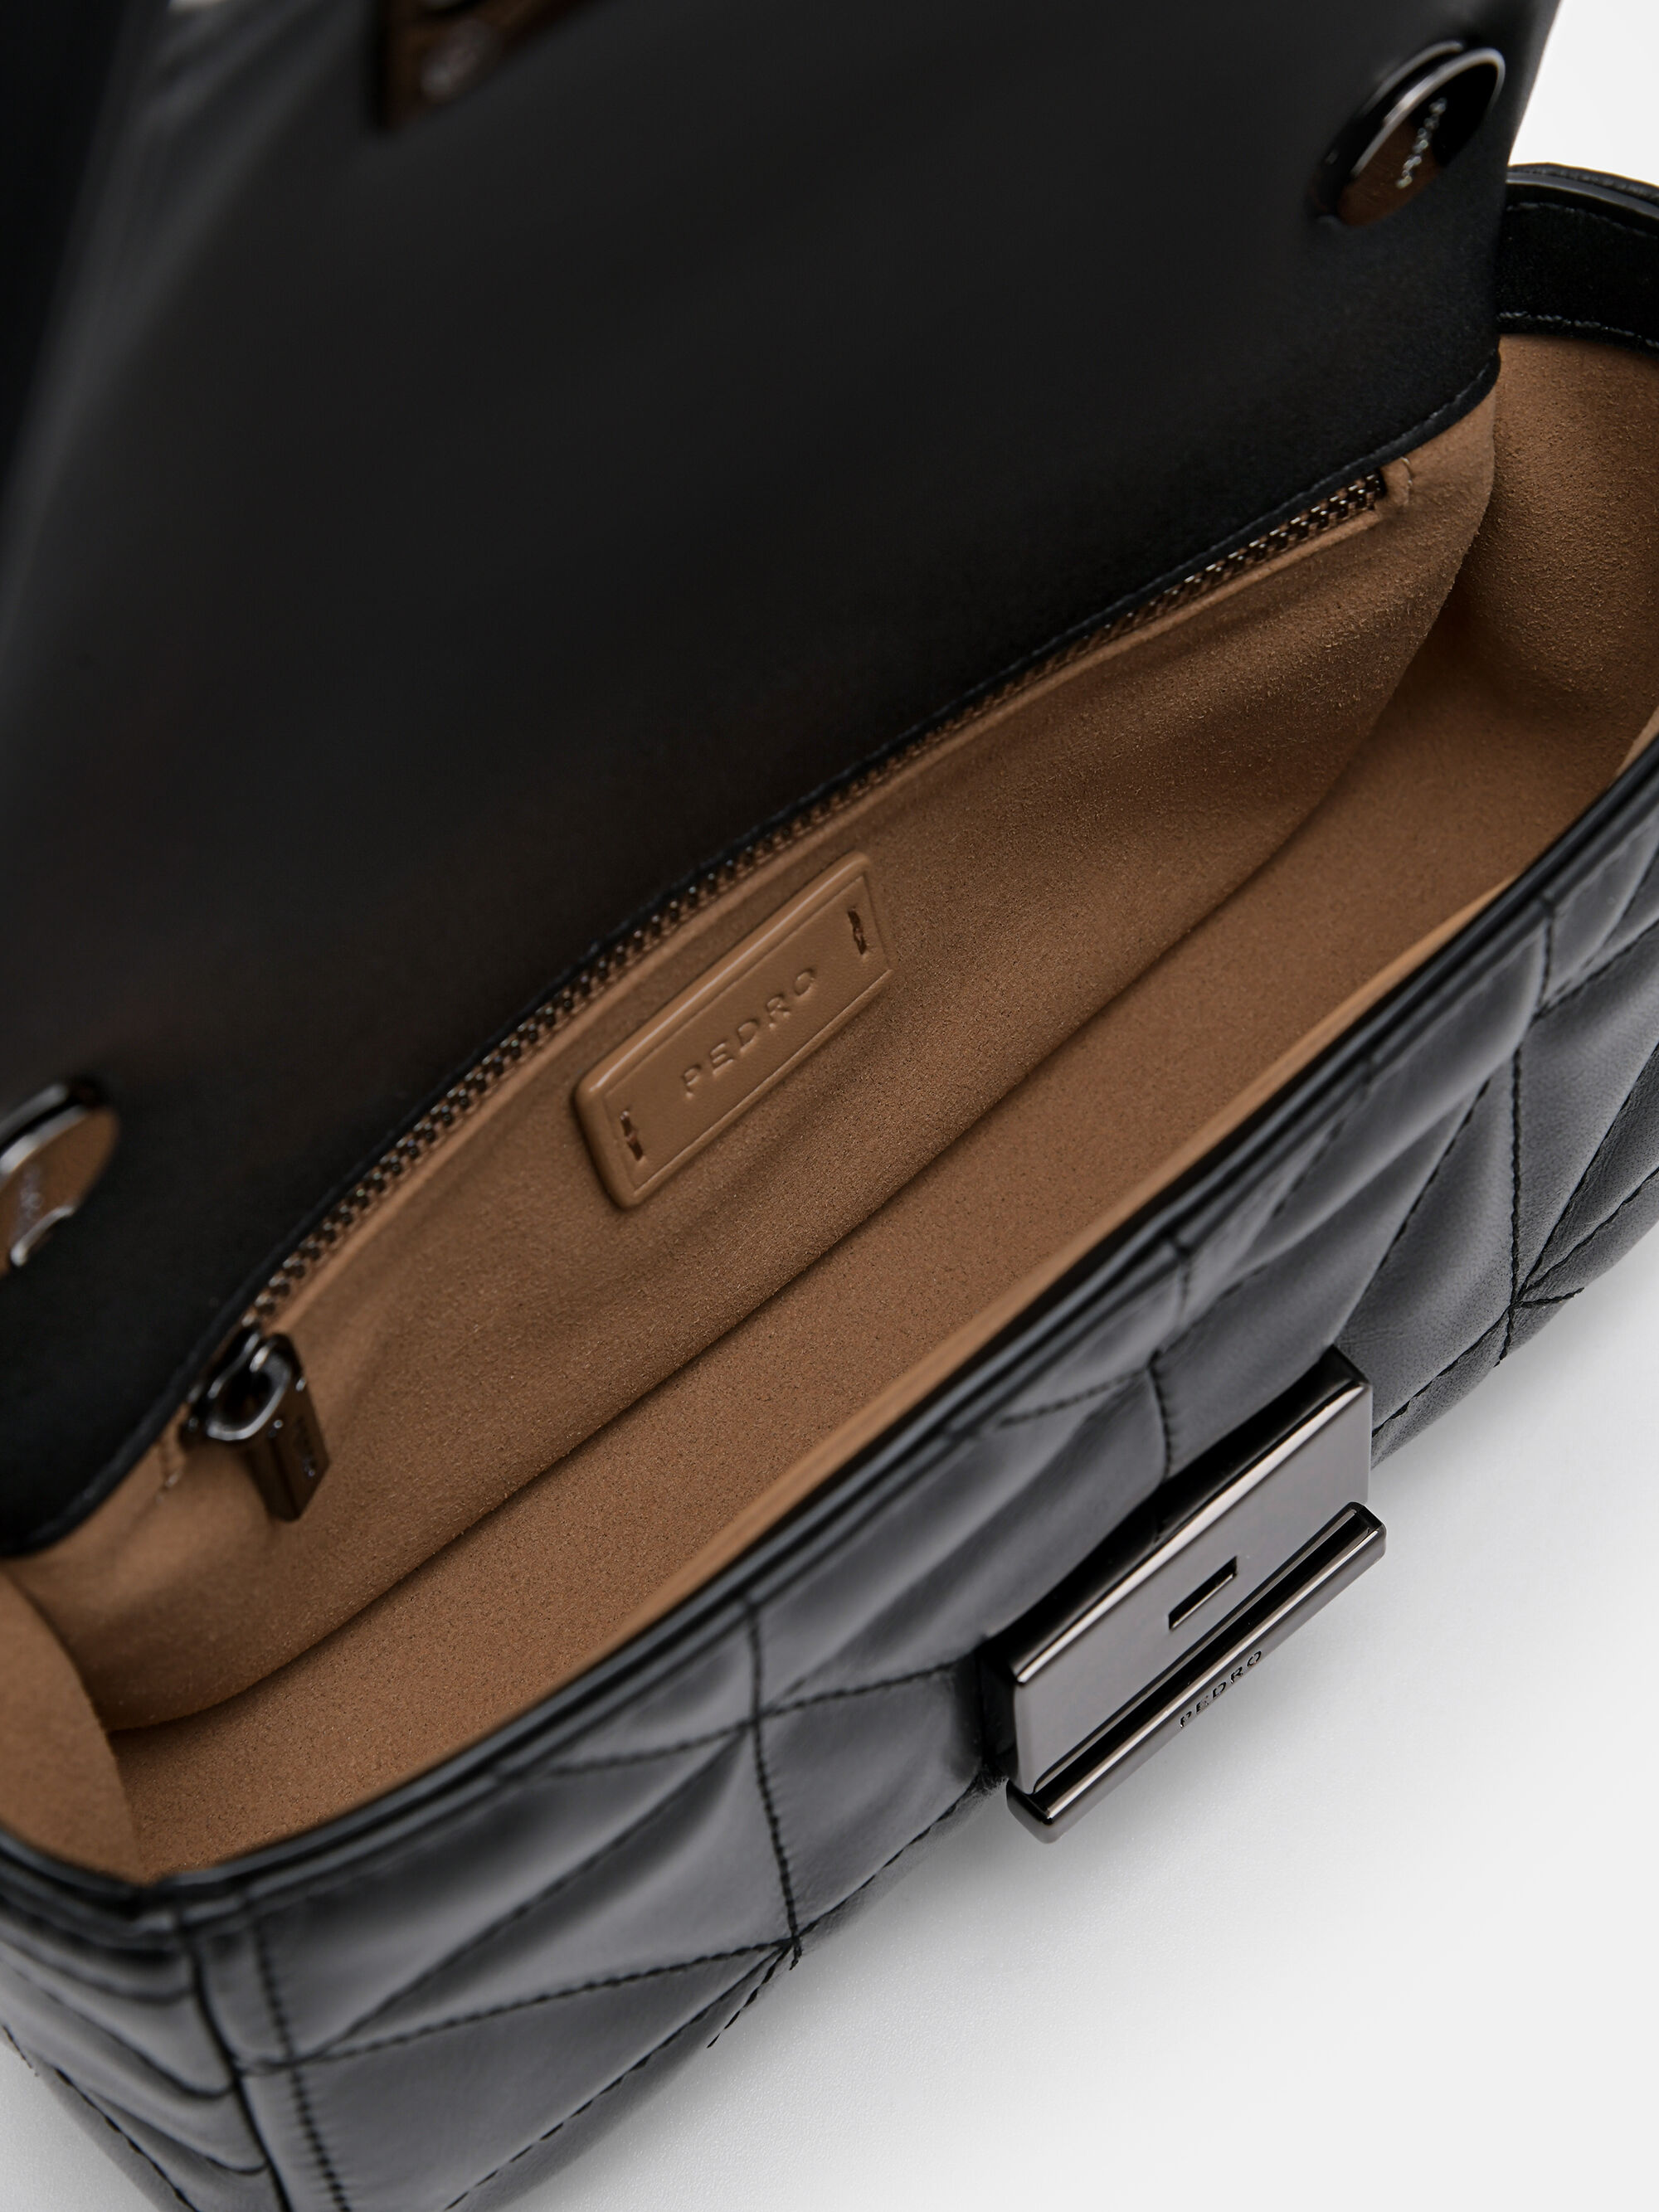 PEDRO Studio Leather Mini Shoulder Bag in Pixel, Black